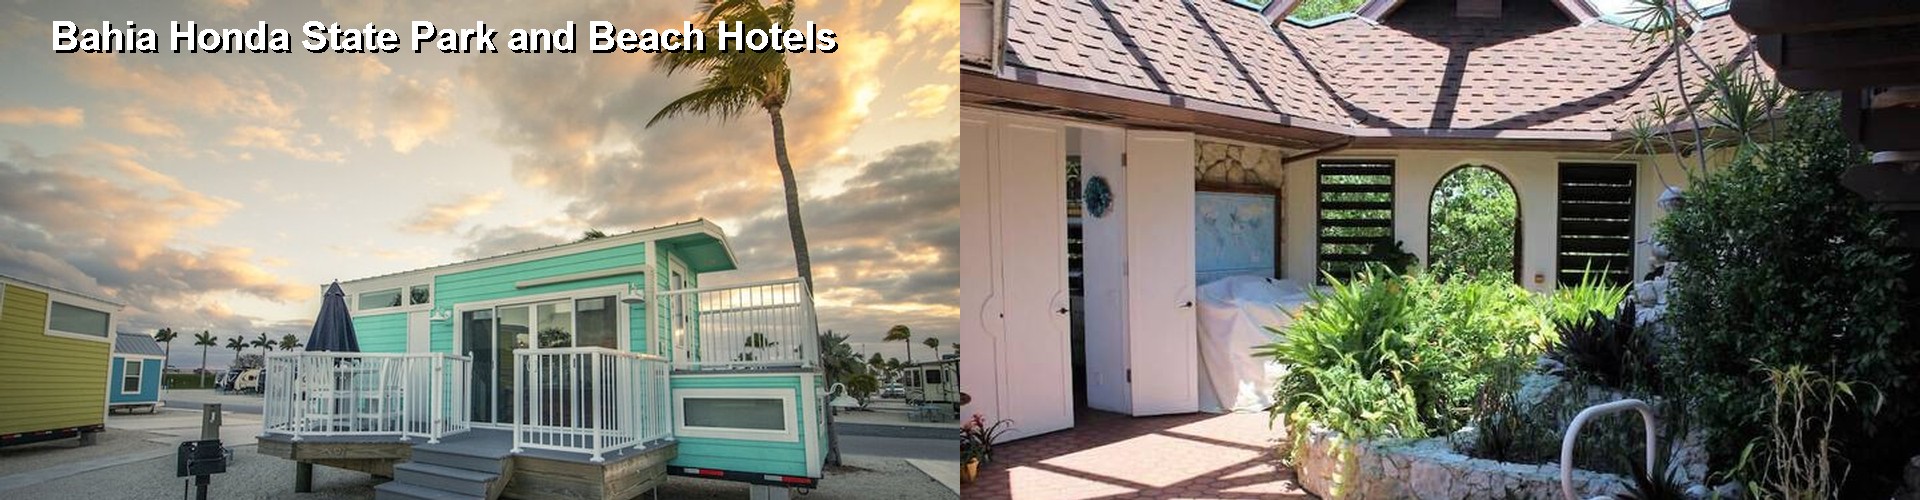 5 Best Hotels near Bahia Honda State Park and Beach